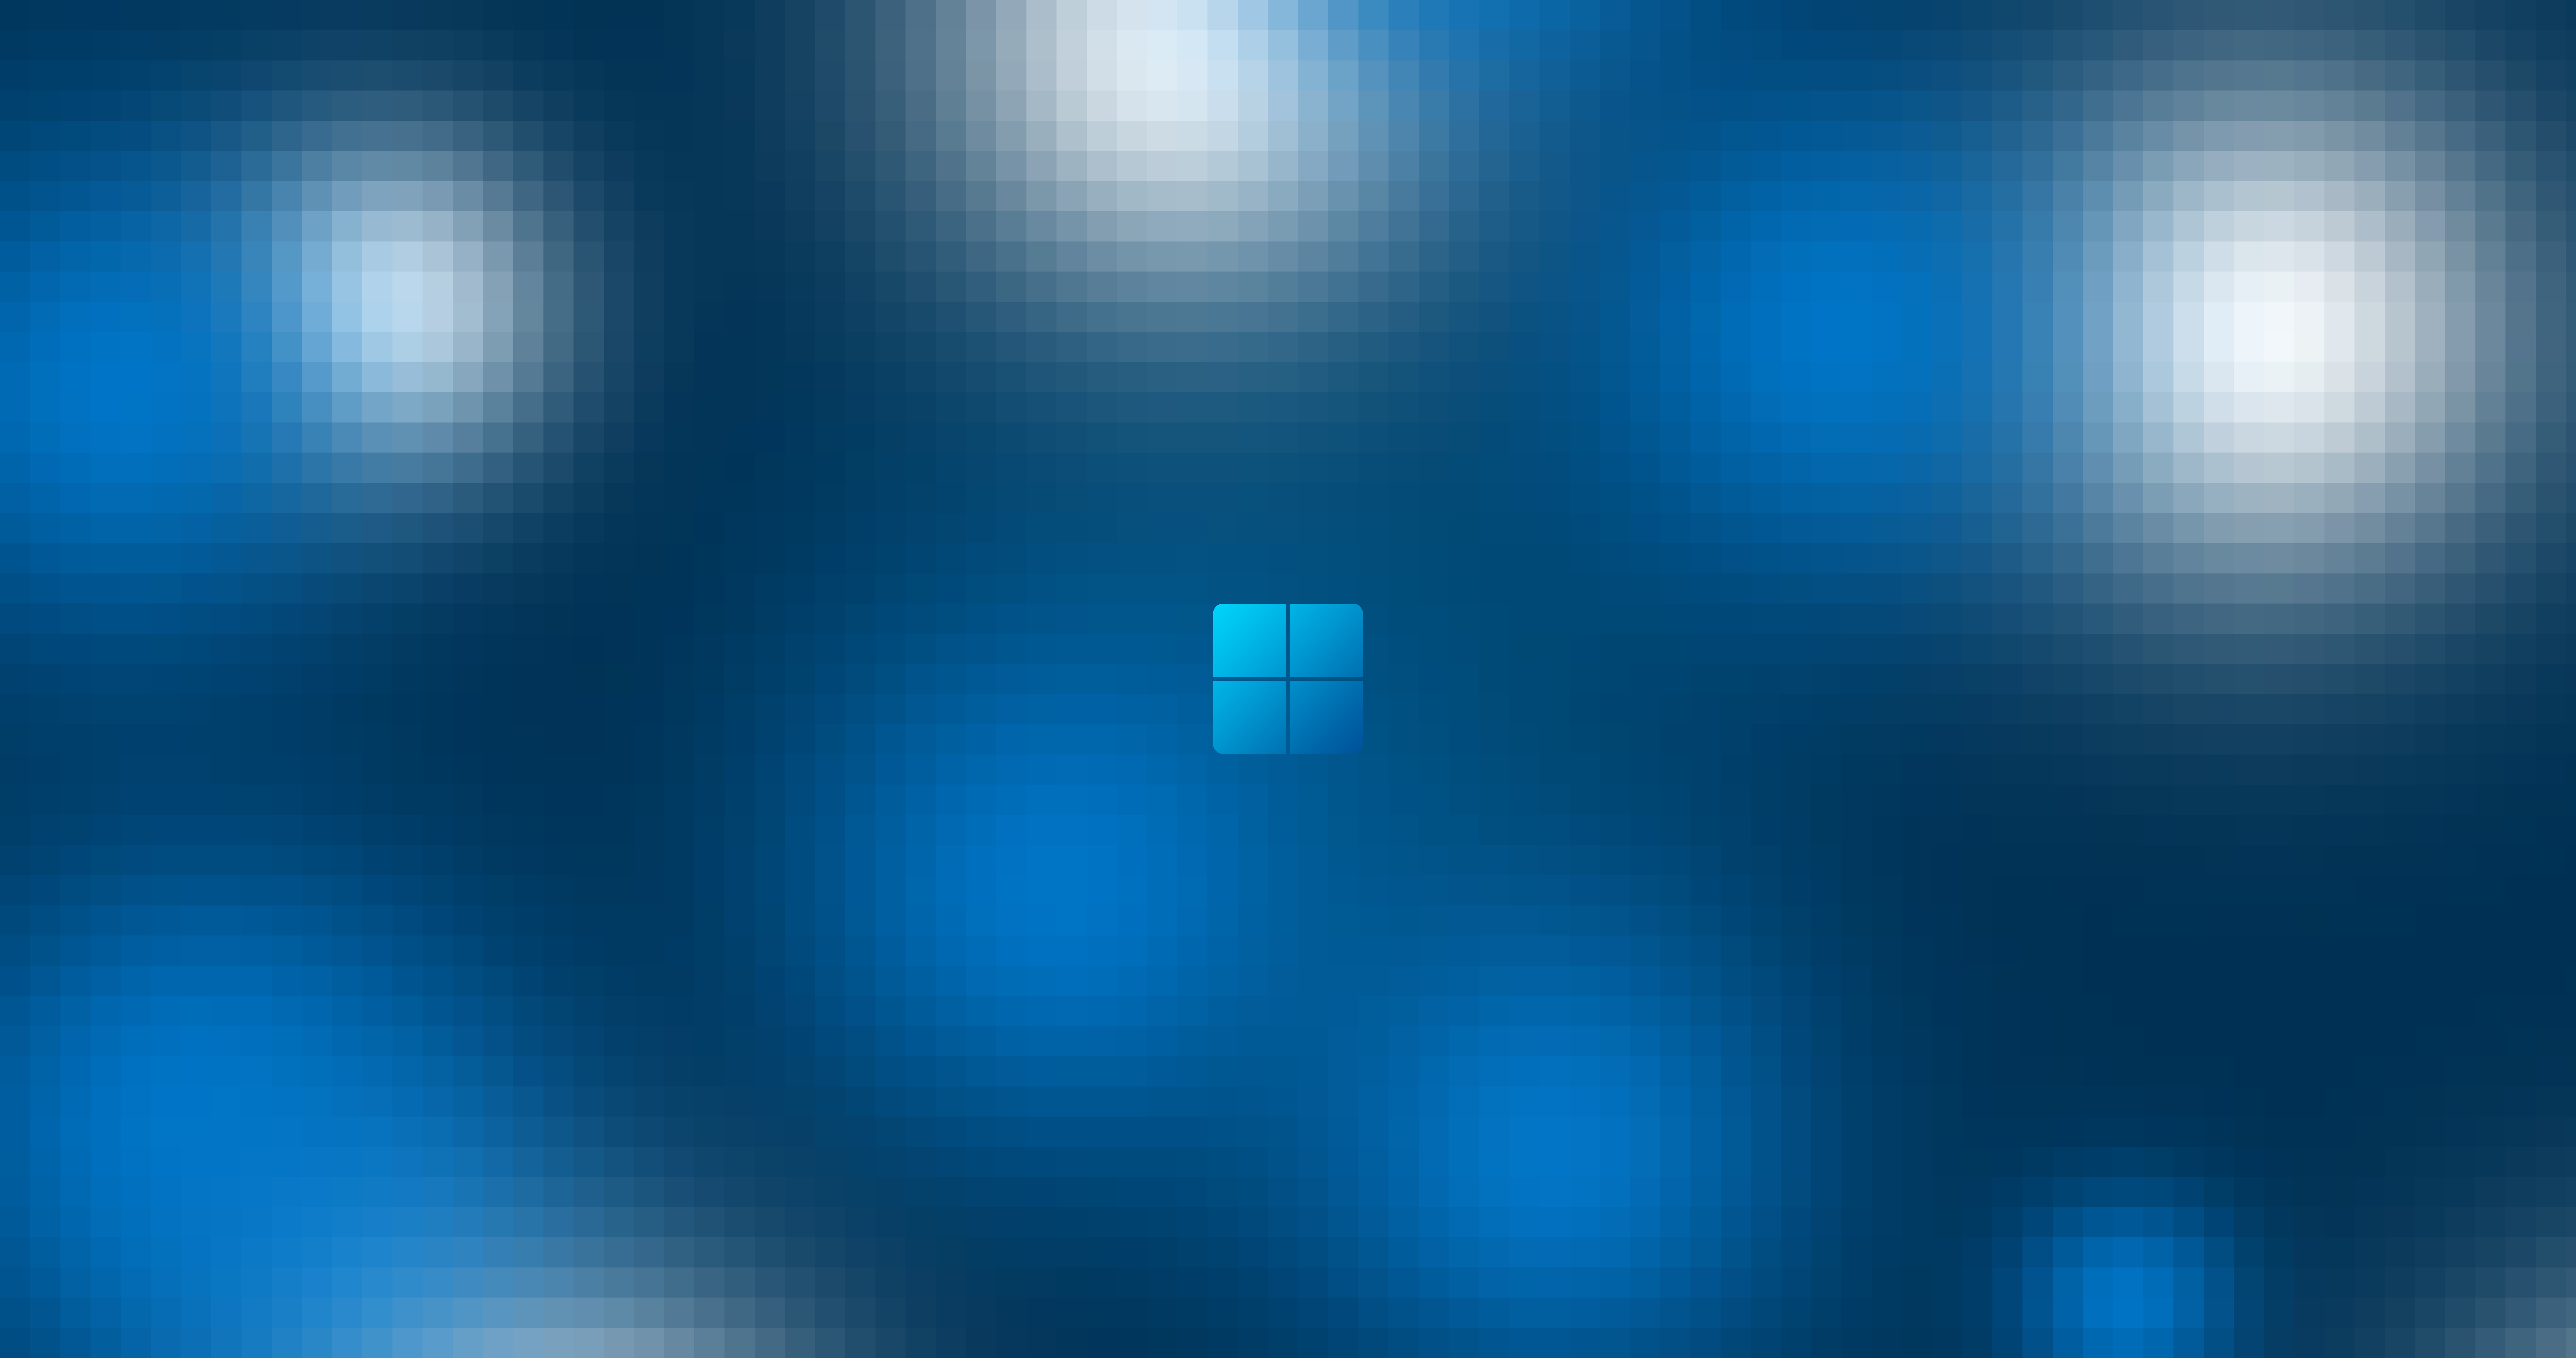 General 17067x9000 windows logo Microsoft operating system technology brand logo